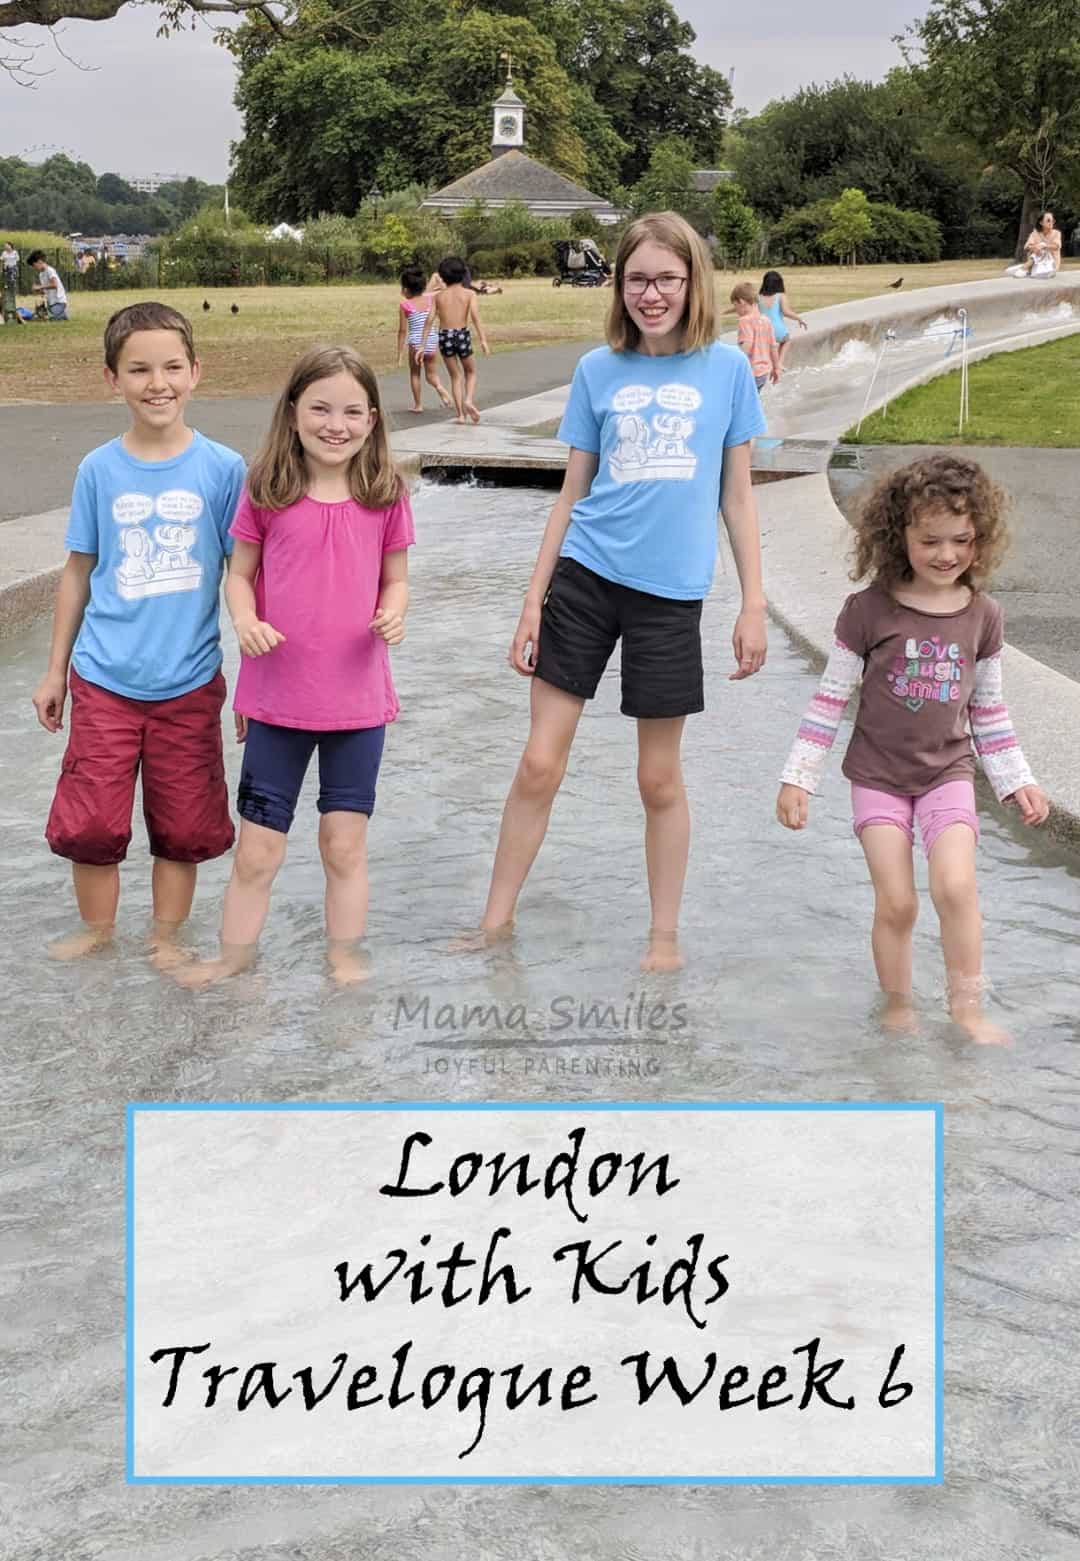 London with Kids: Travelogue Week 6 #traveljournal #travelwithkids #travelmom #travelblogger